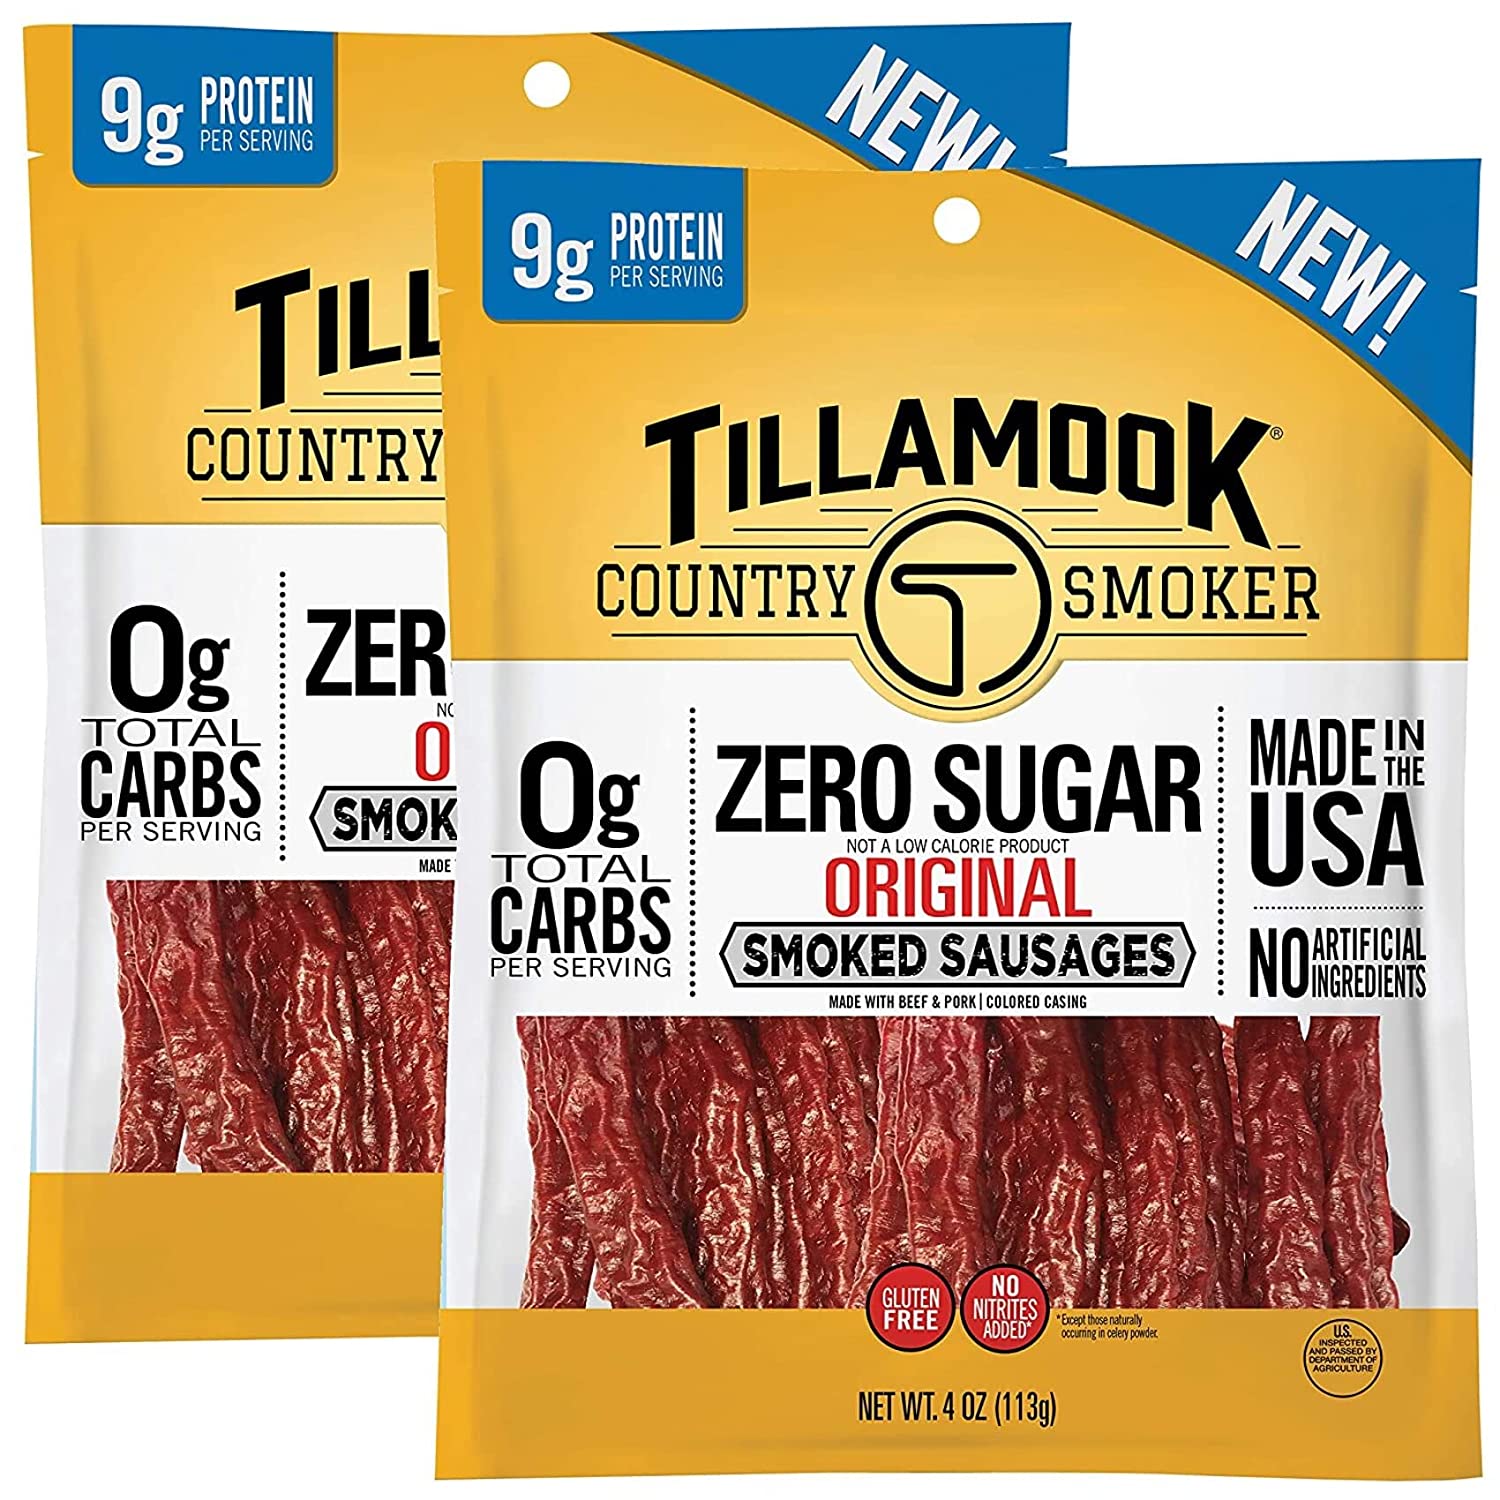 Tillamook Country Smoker Zero Sugar Smoked Sausages: 8-Oz $6.98 or 10-Oz $8.18 + Free Shipping w/ Prime or on Orders $35+